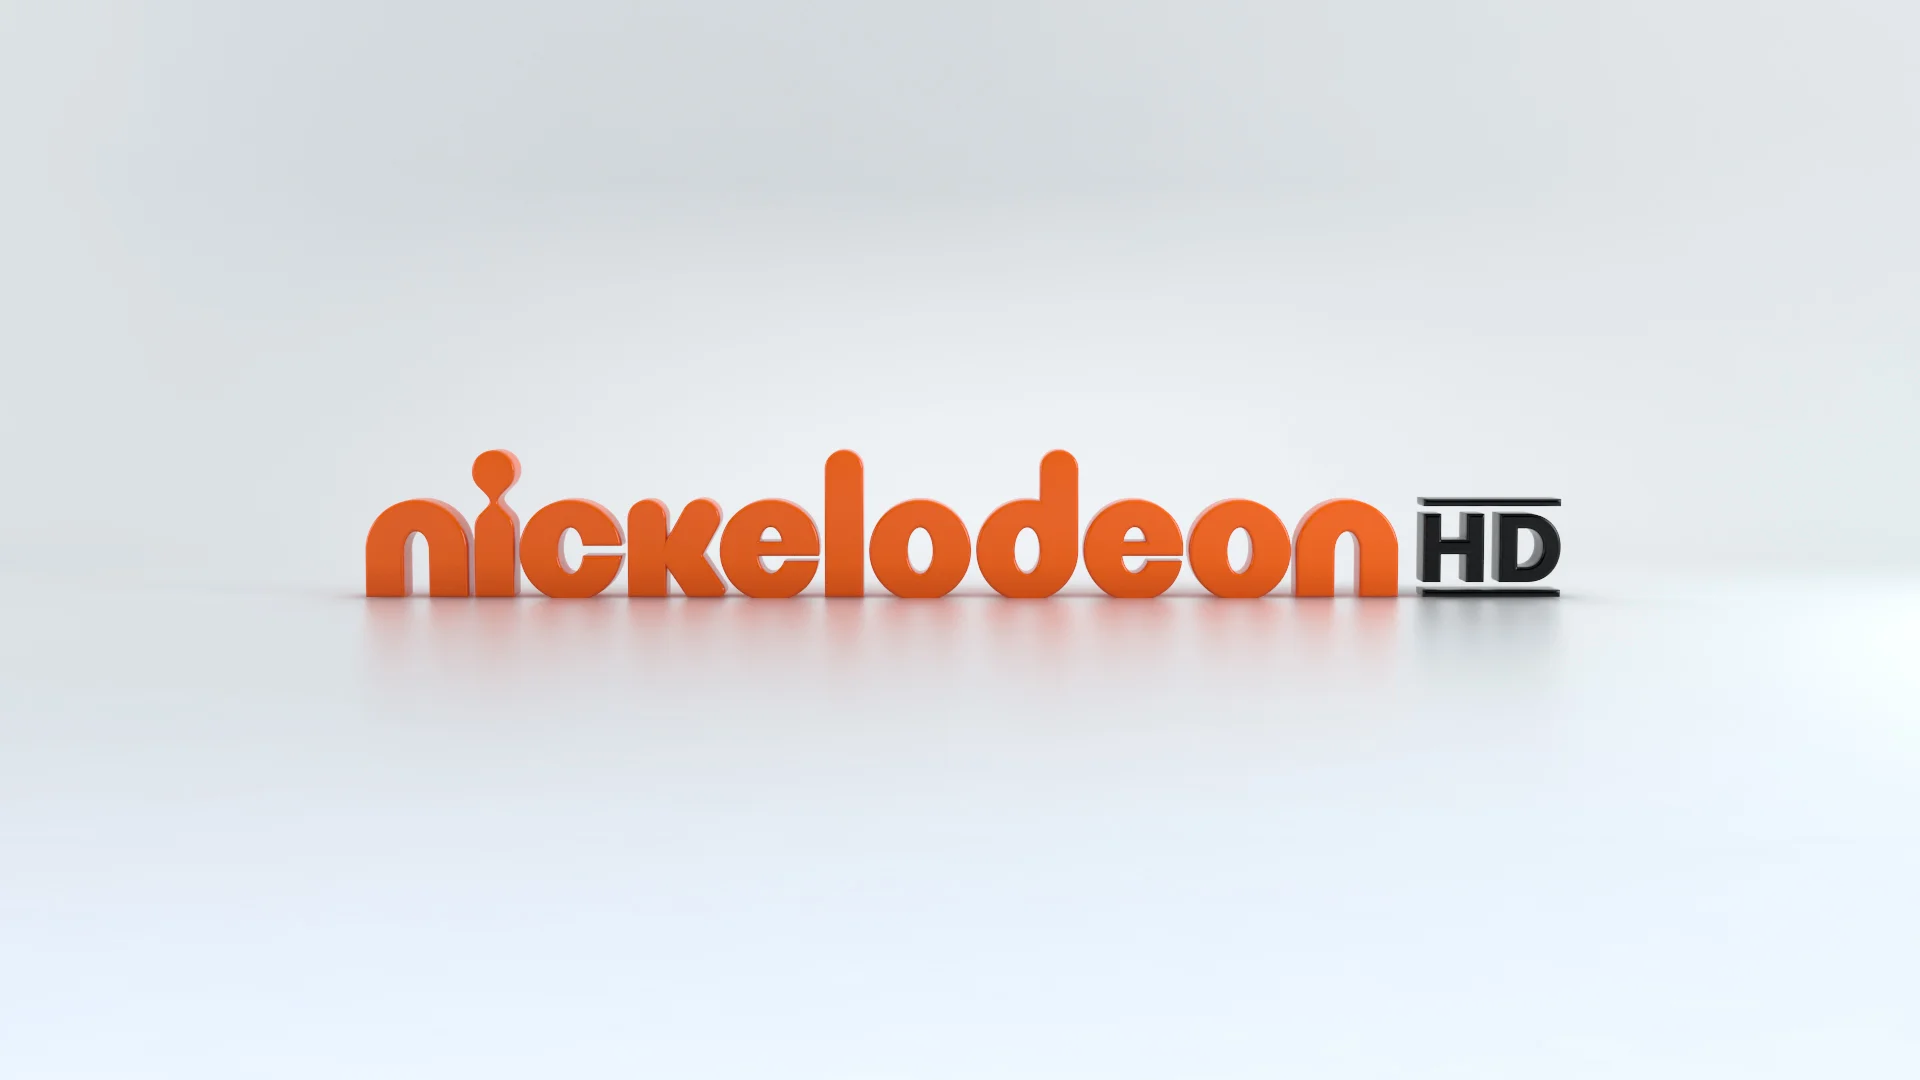 Nick channel. Канал Nickelodeon. Телеканал Nickelodeon логотип.